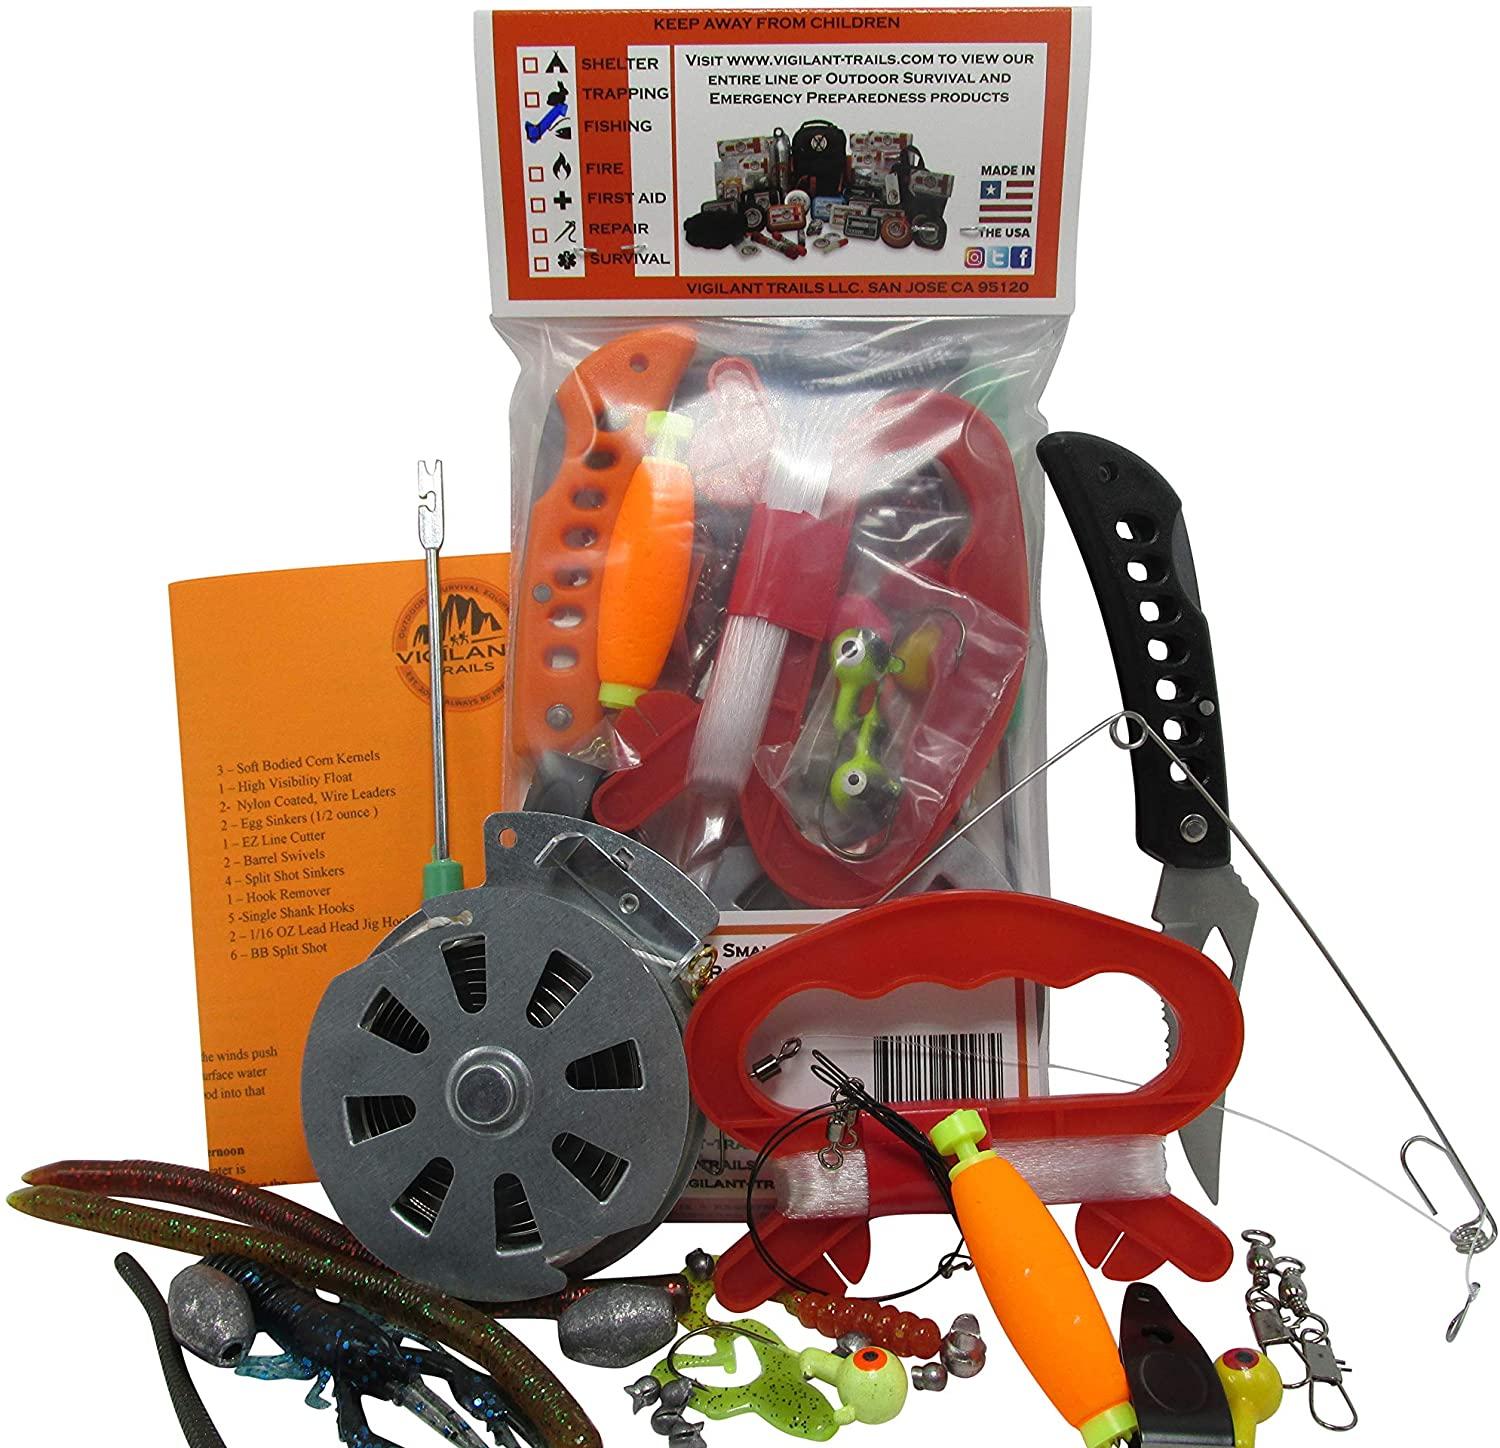 Vigilant trails pocket survival fishing kit stage-3